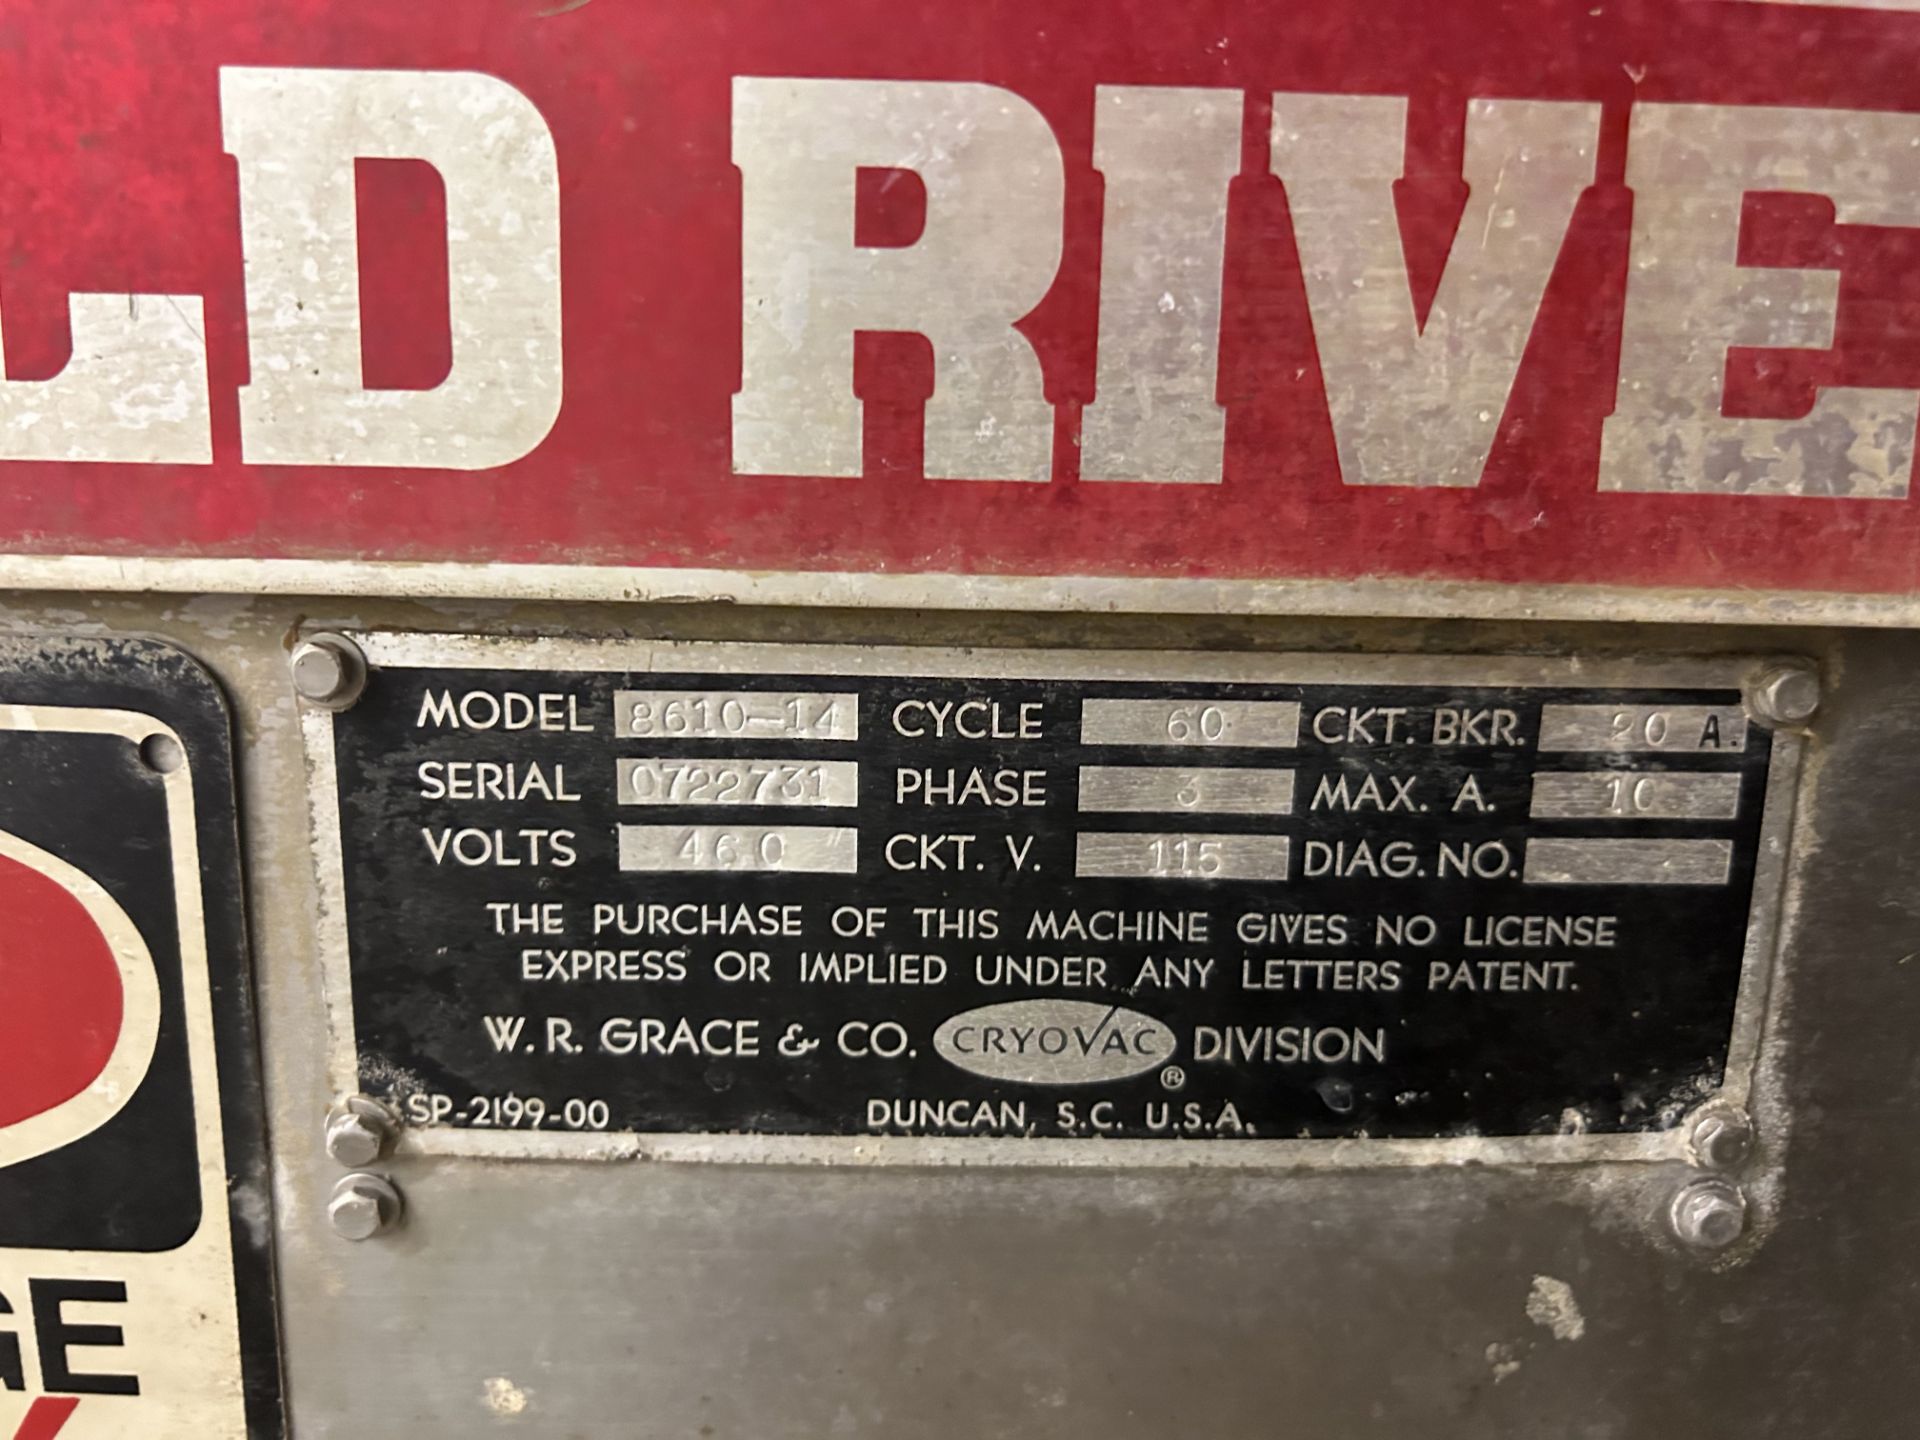 Old Rivers Cryovac Vacuum Sealer, Model #8610-14, S/N #0722731, Cycle 60, PH 3, Volts 460, - Image 3 of 20